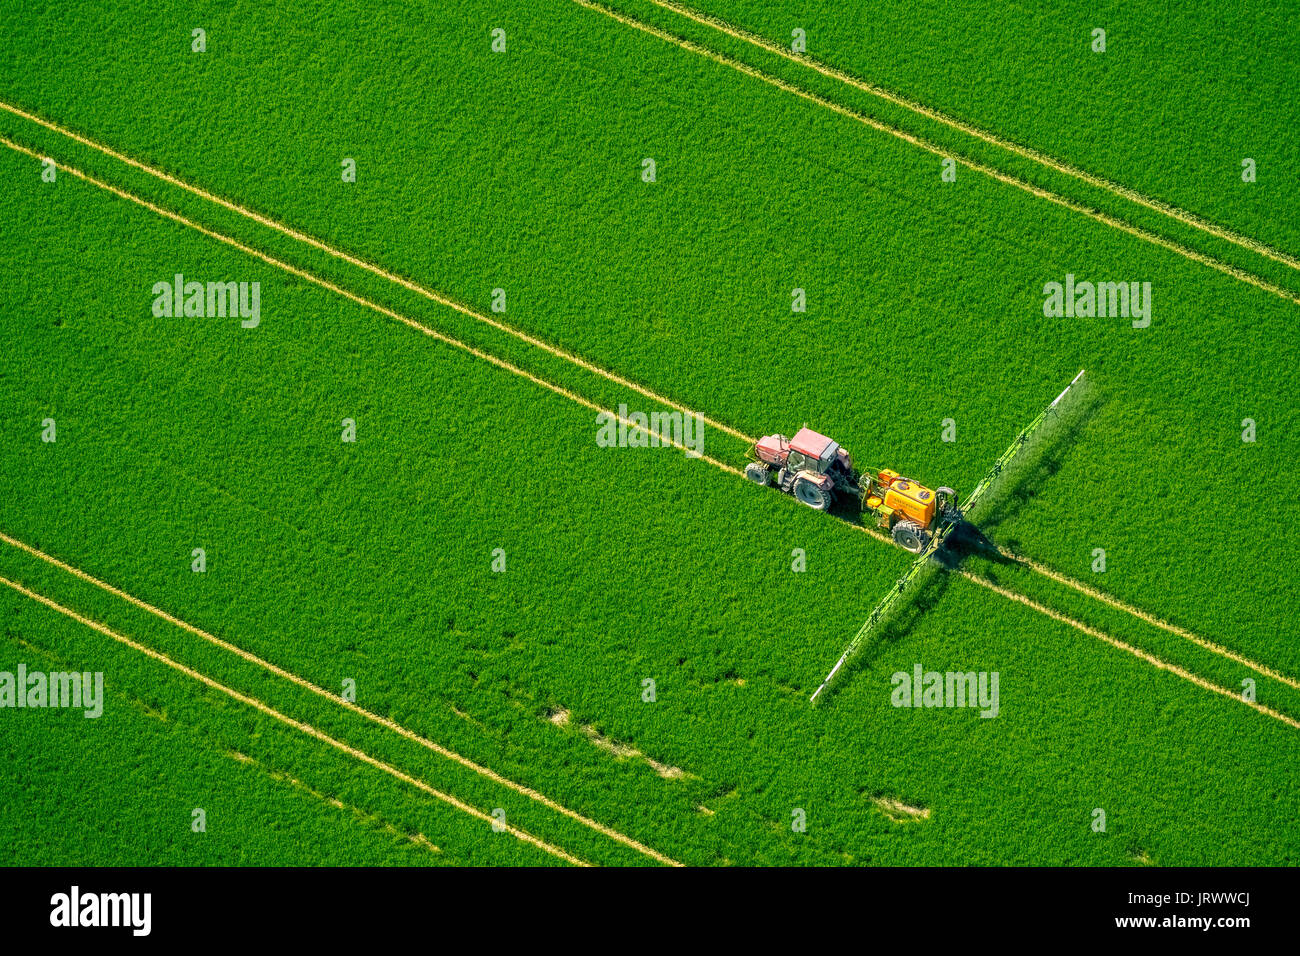 Tracker spraying pesticides on a green grain field, agriculture, aerial photo, Warstein, Sauerland, North Rhine-Westphalia Stock Photo